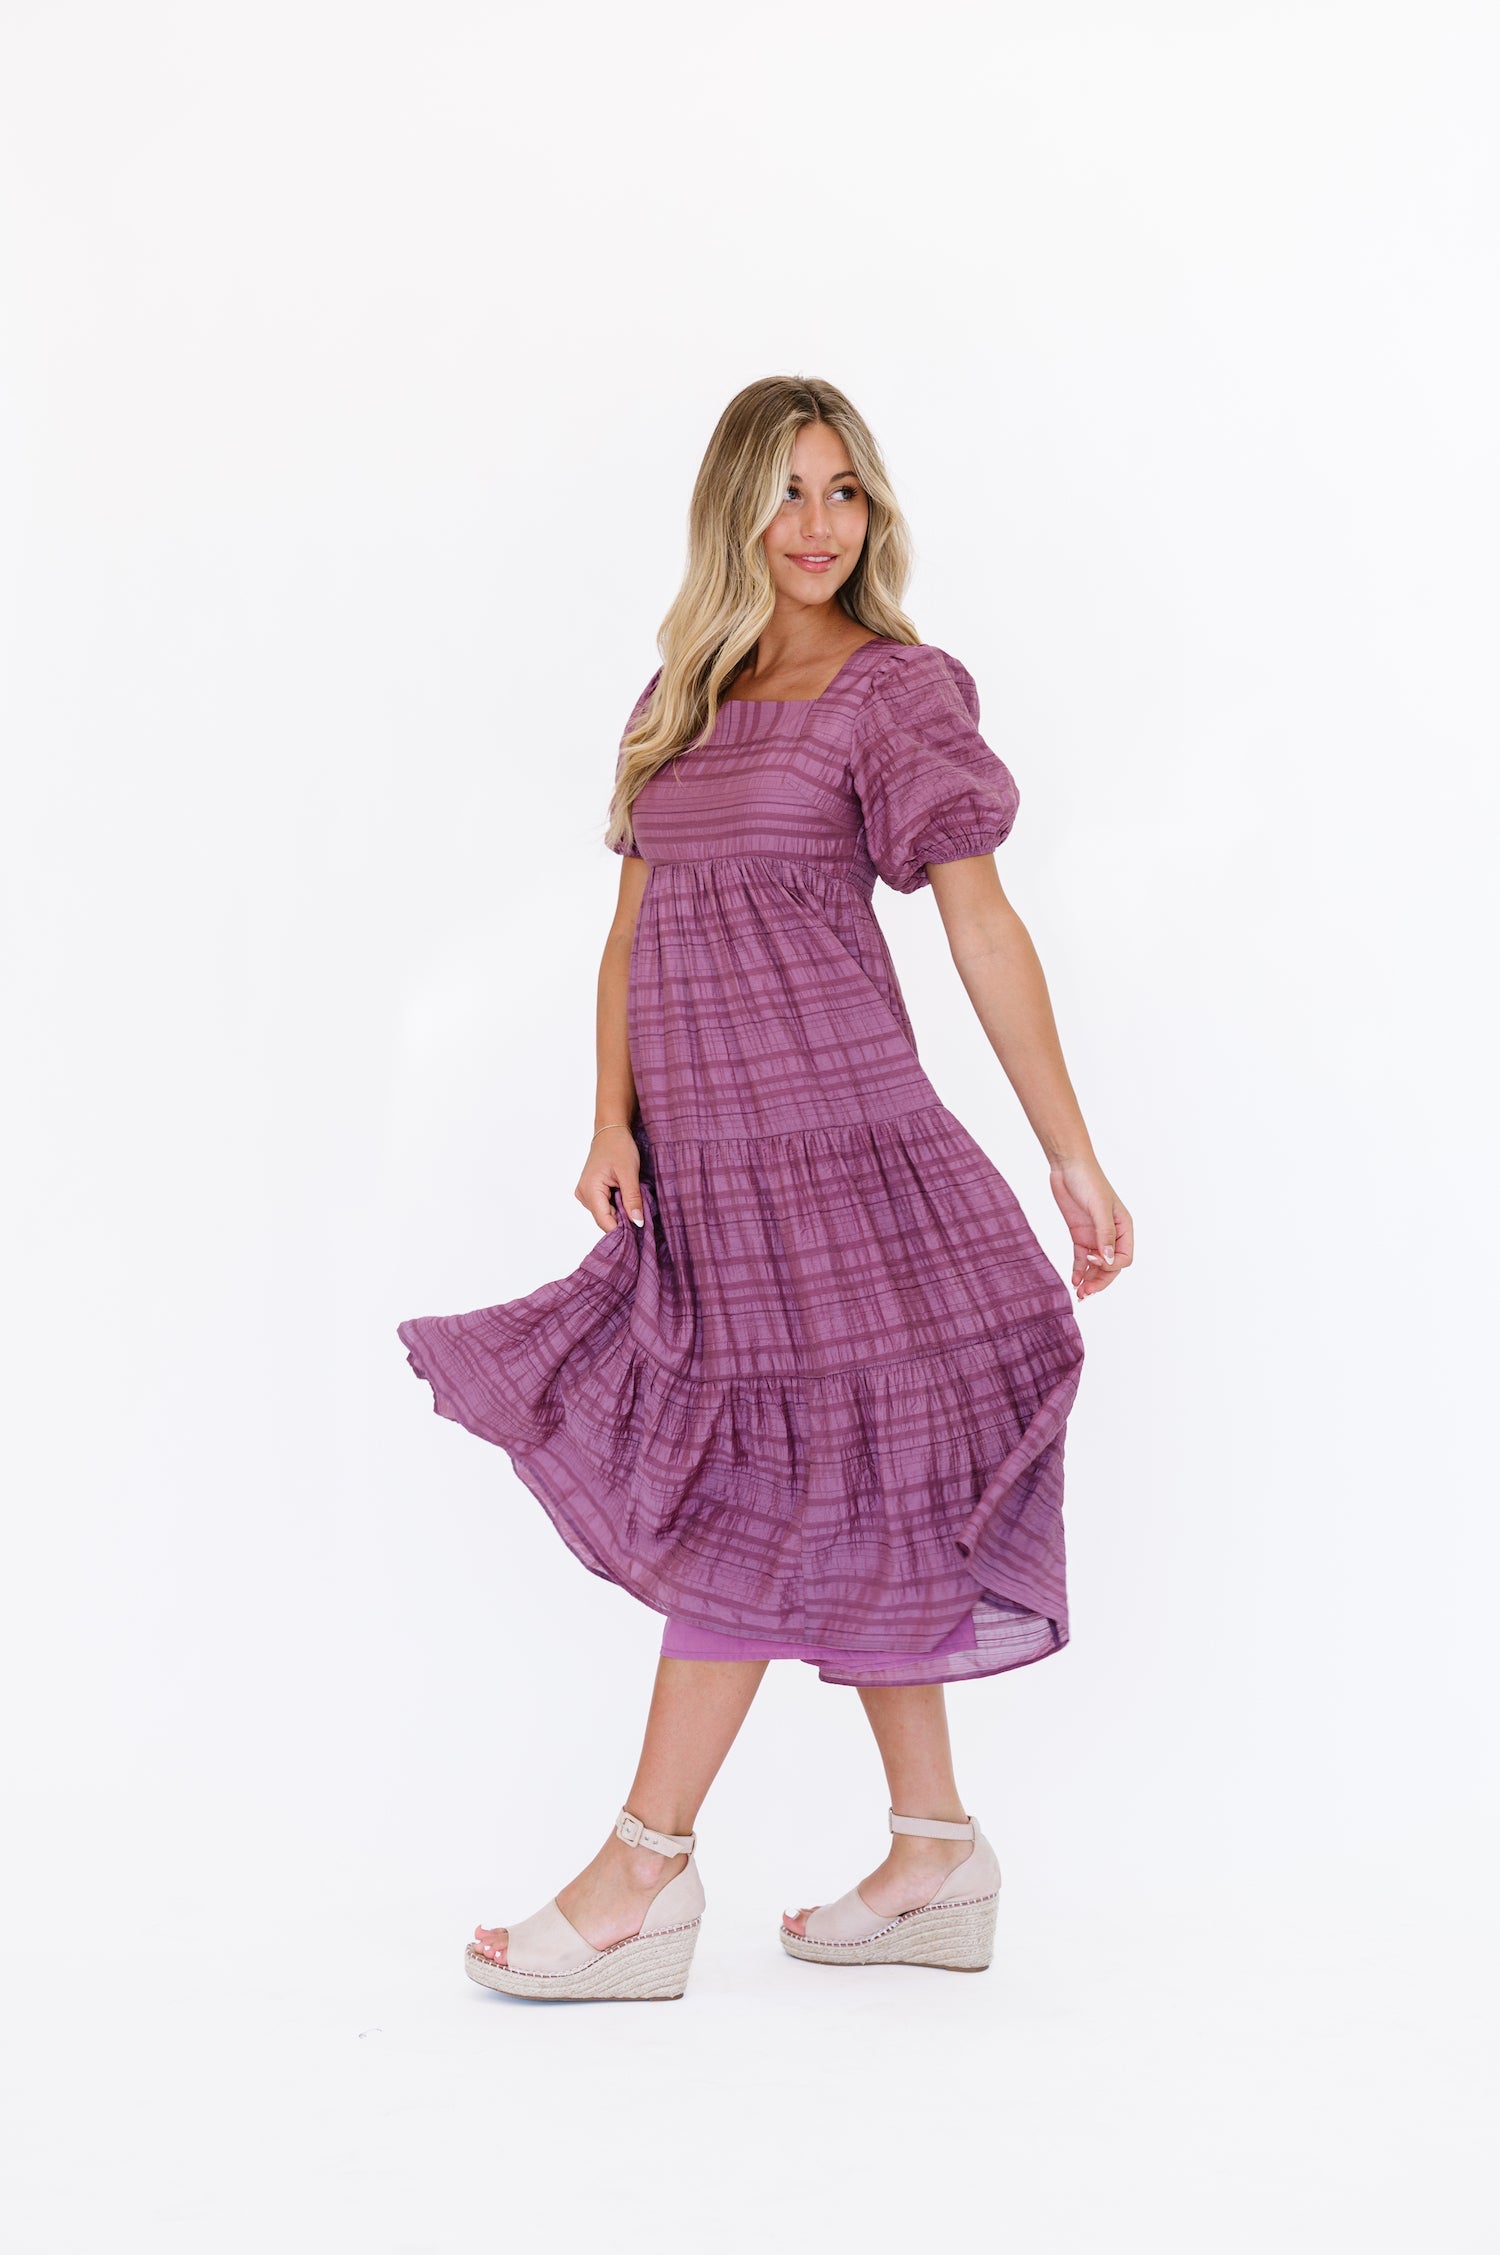 Carlile Dress in Purple - Preorder